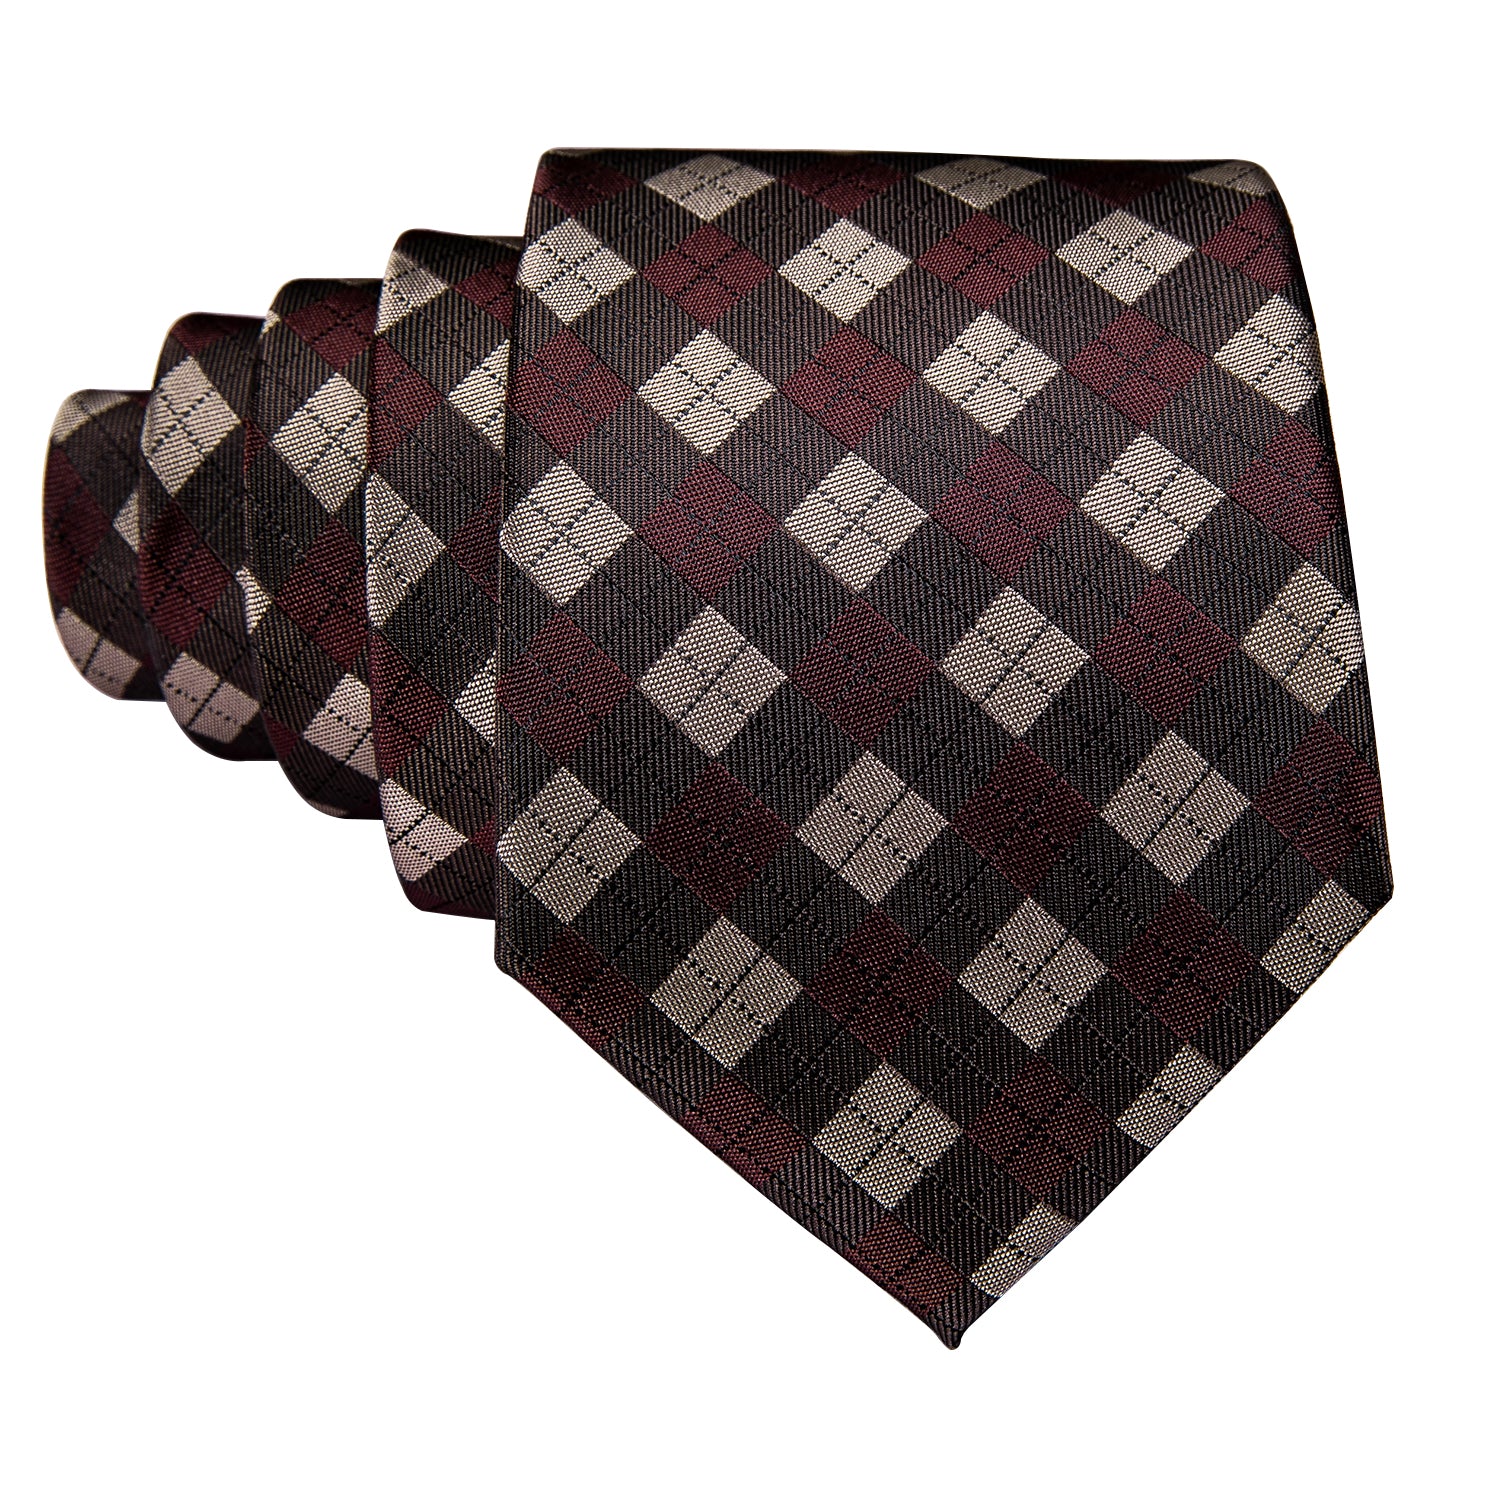 New Red Brown Plaid Silk Tie Hanky Cufflinks Set